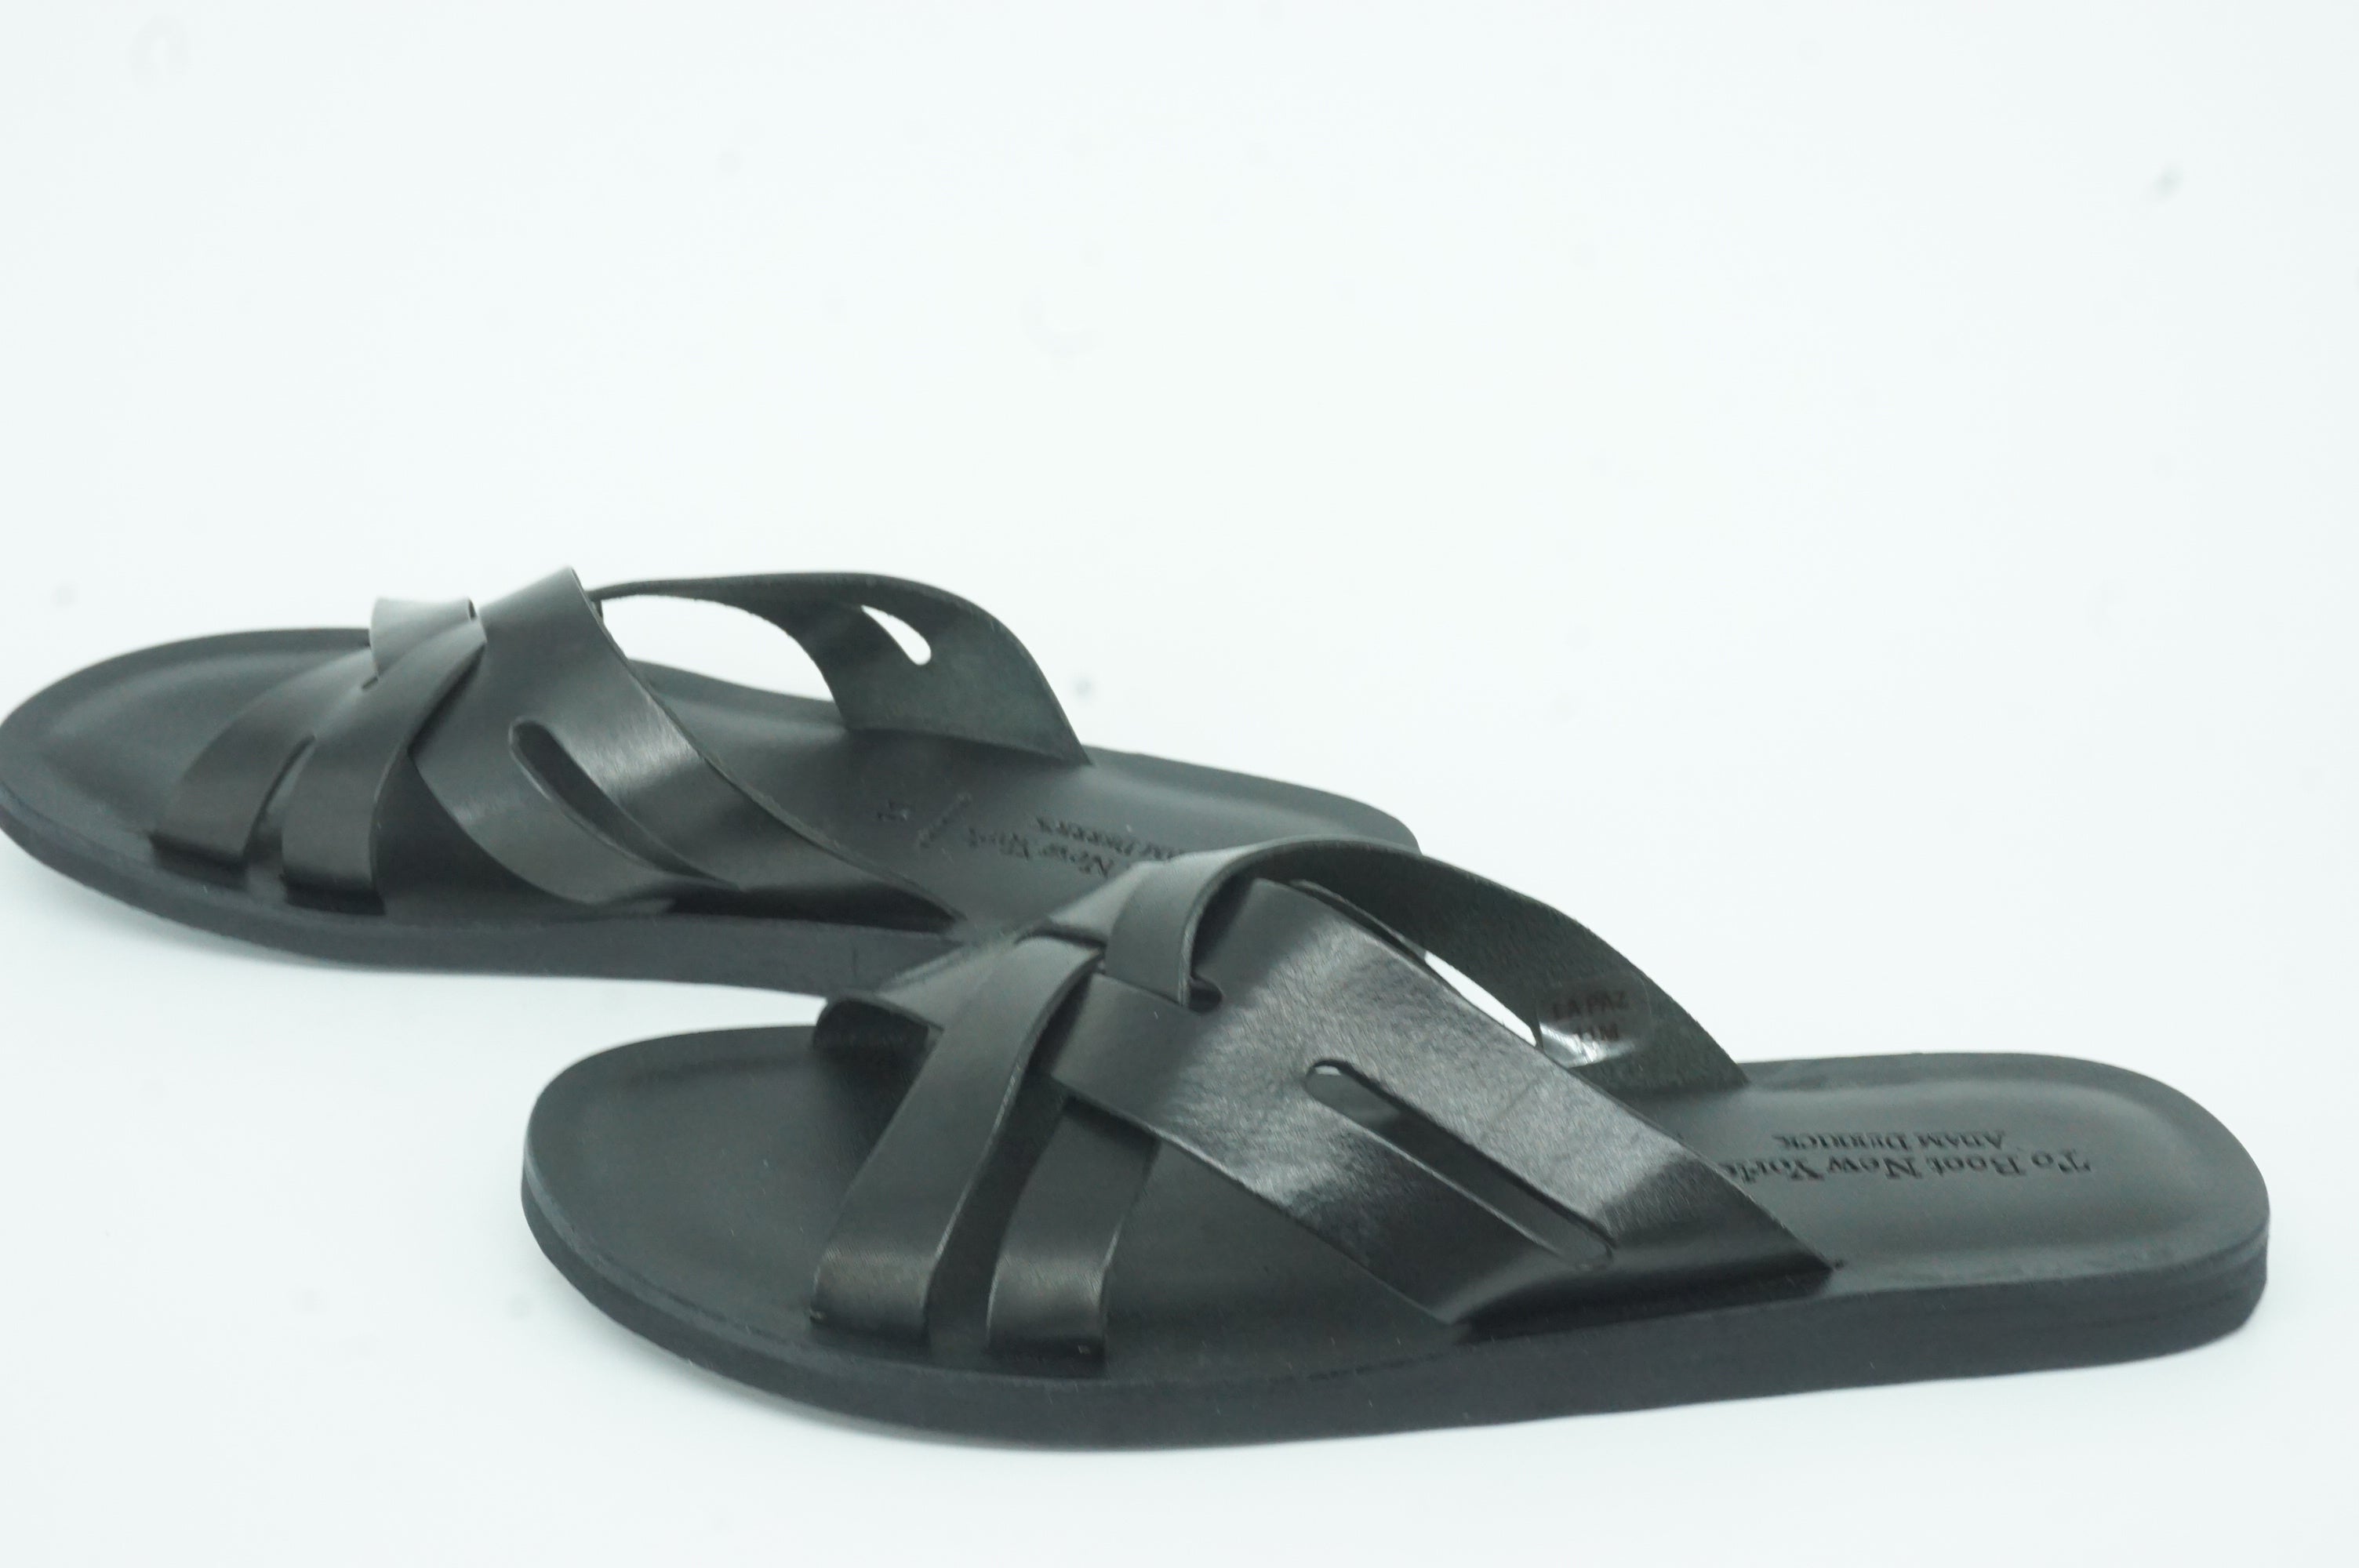 To Boot New York Black LeatherLa Paz Flip Flop Men Sandals Size 11 $225 Flat